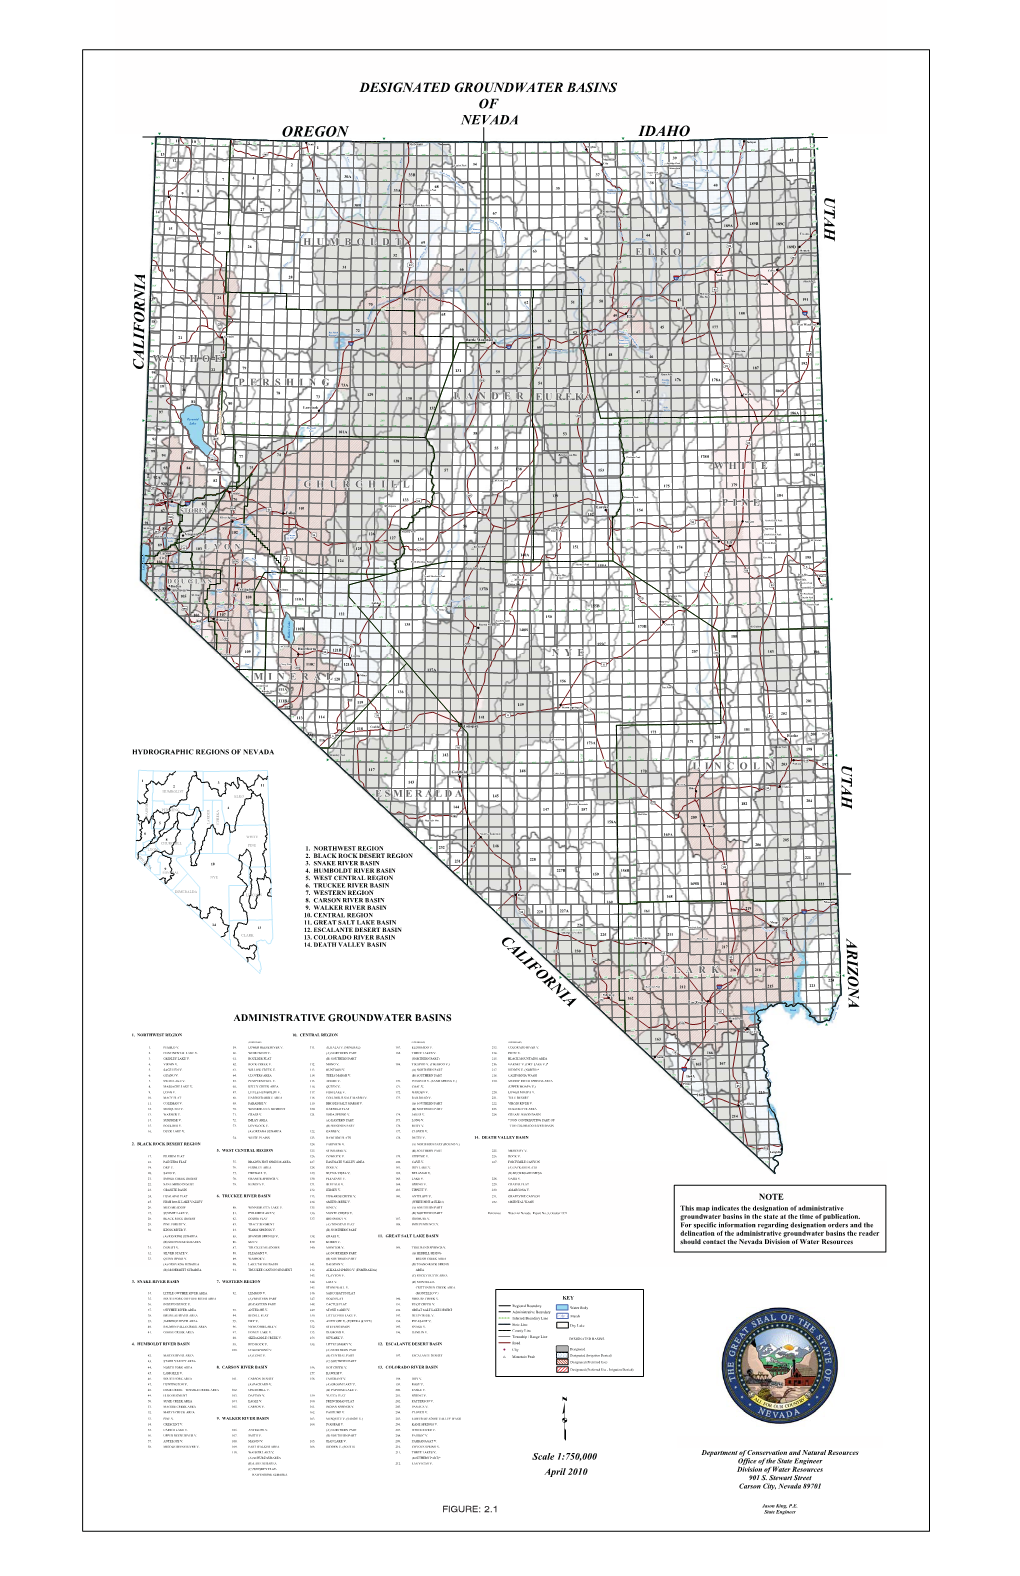 2013-9-19 Water System Plan Figure